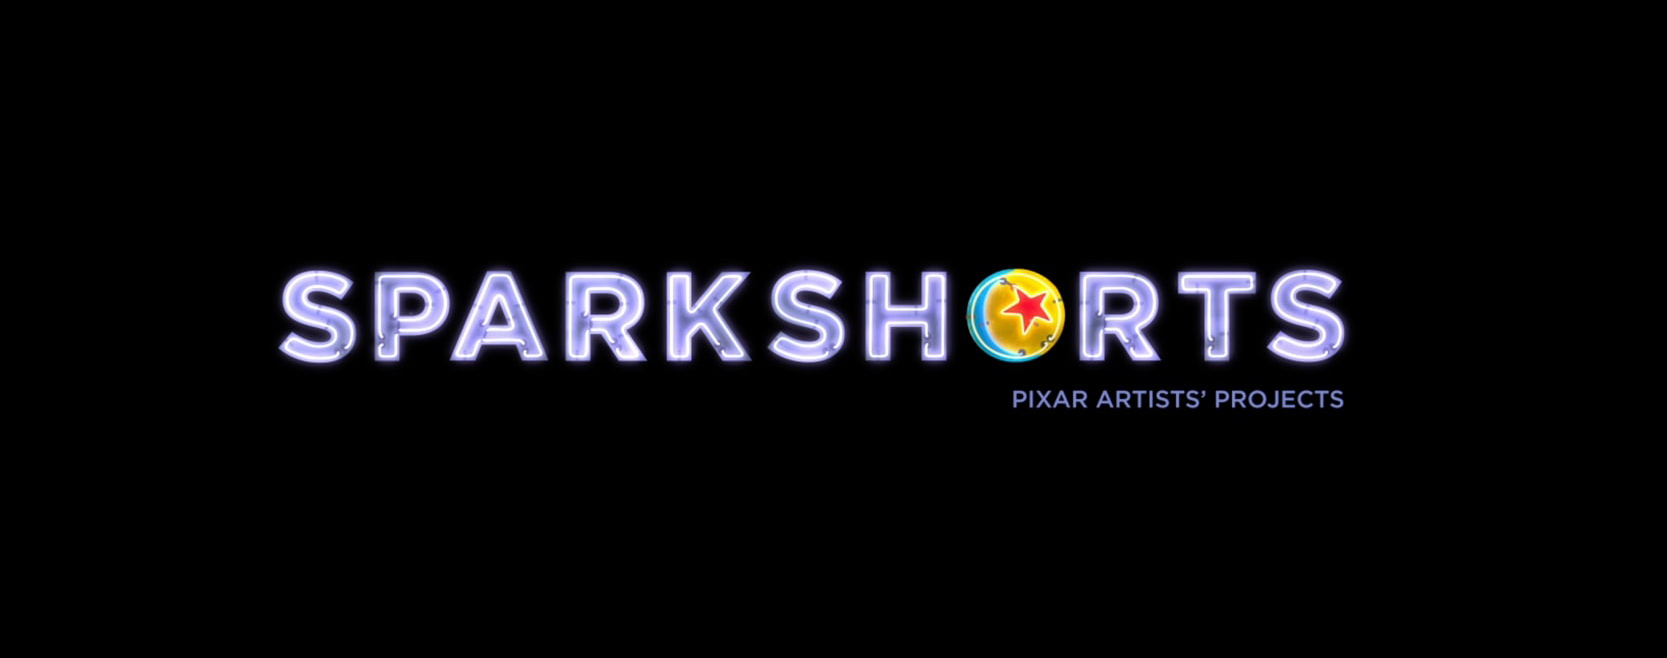 Disney SparkShorts Lineup Unveiled For Disney+